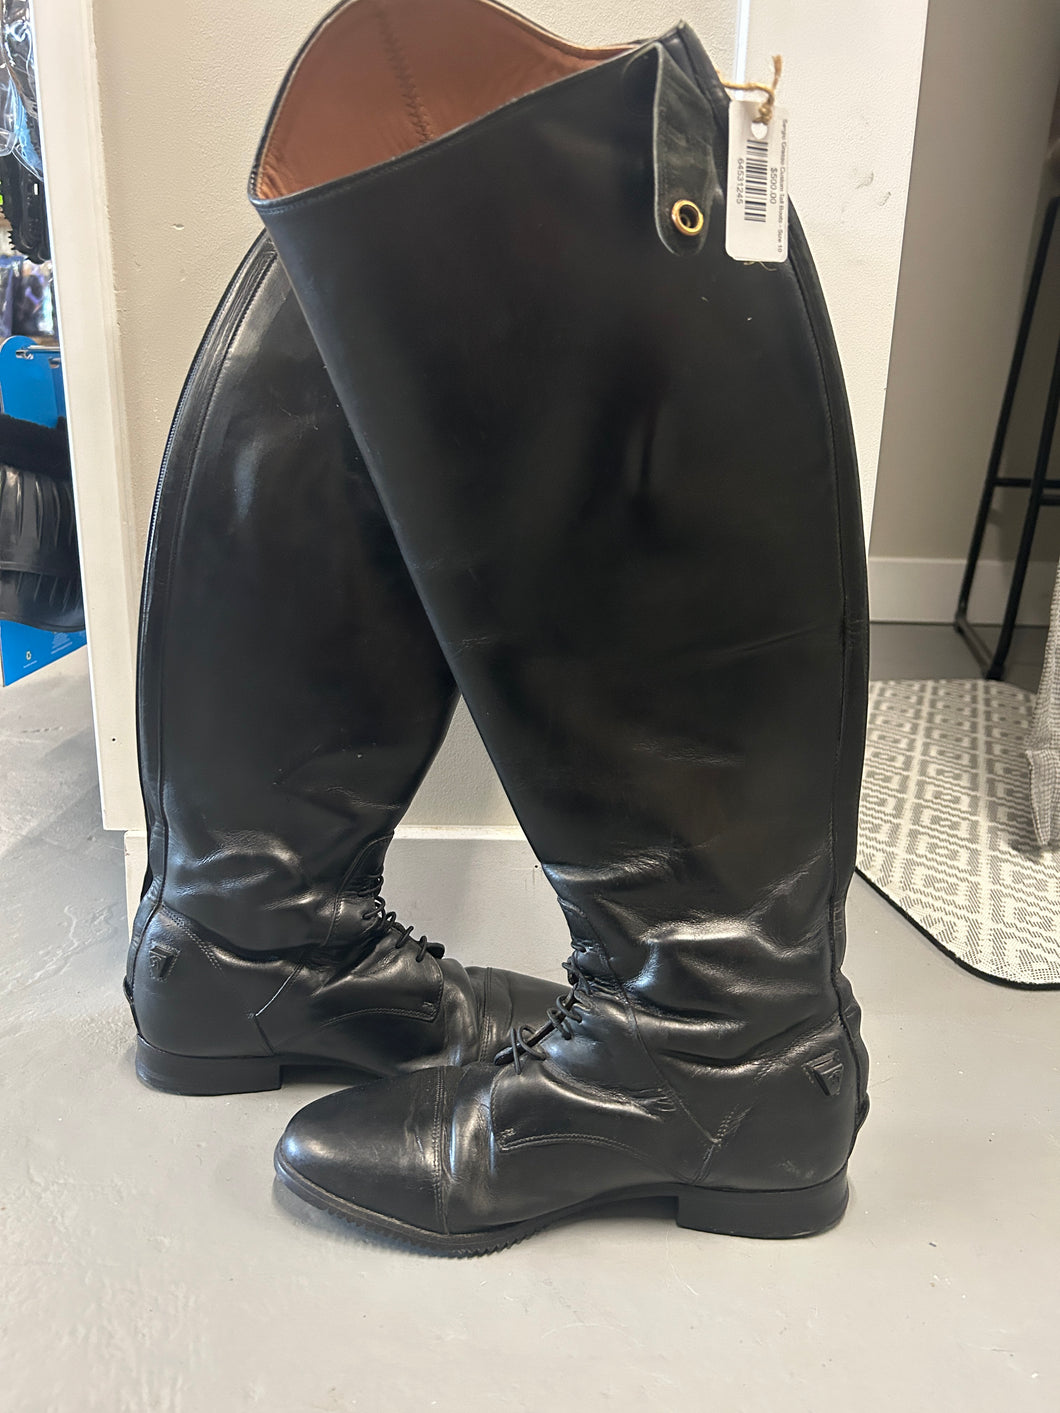 Sergio Grasso Custom Tall Boots - Size 10